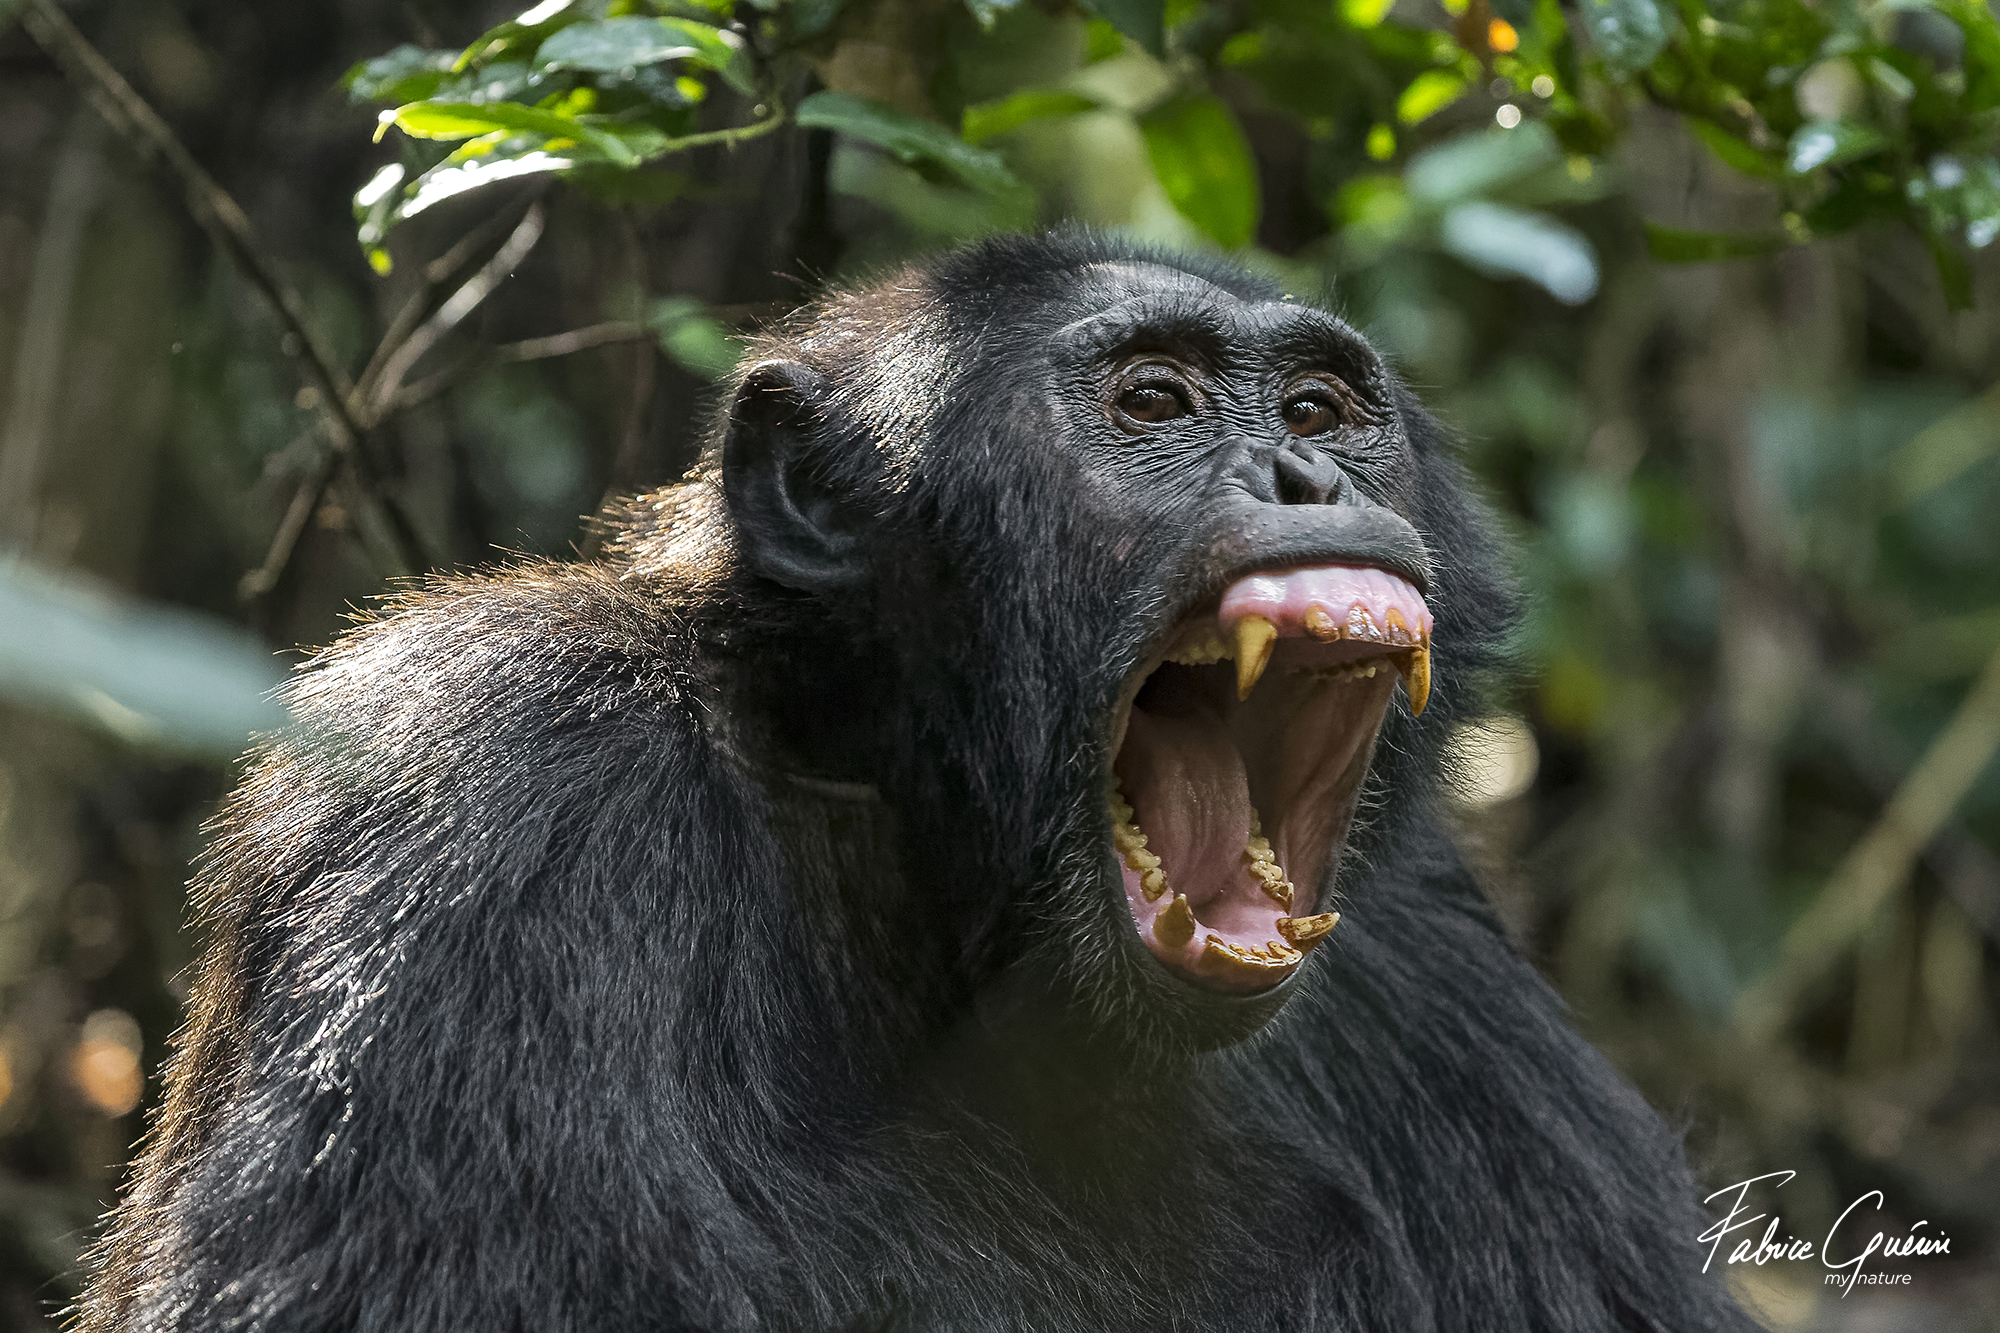 Attaques meurtrières de chimpanzés contre des gorilles !